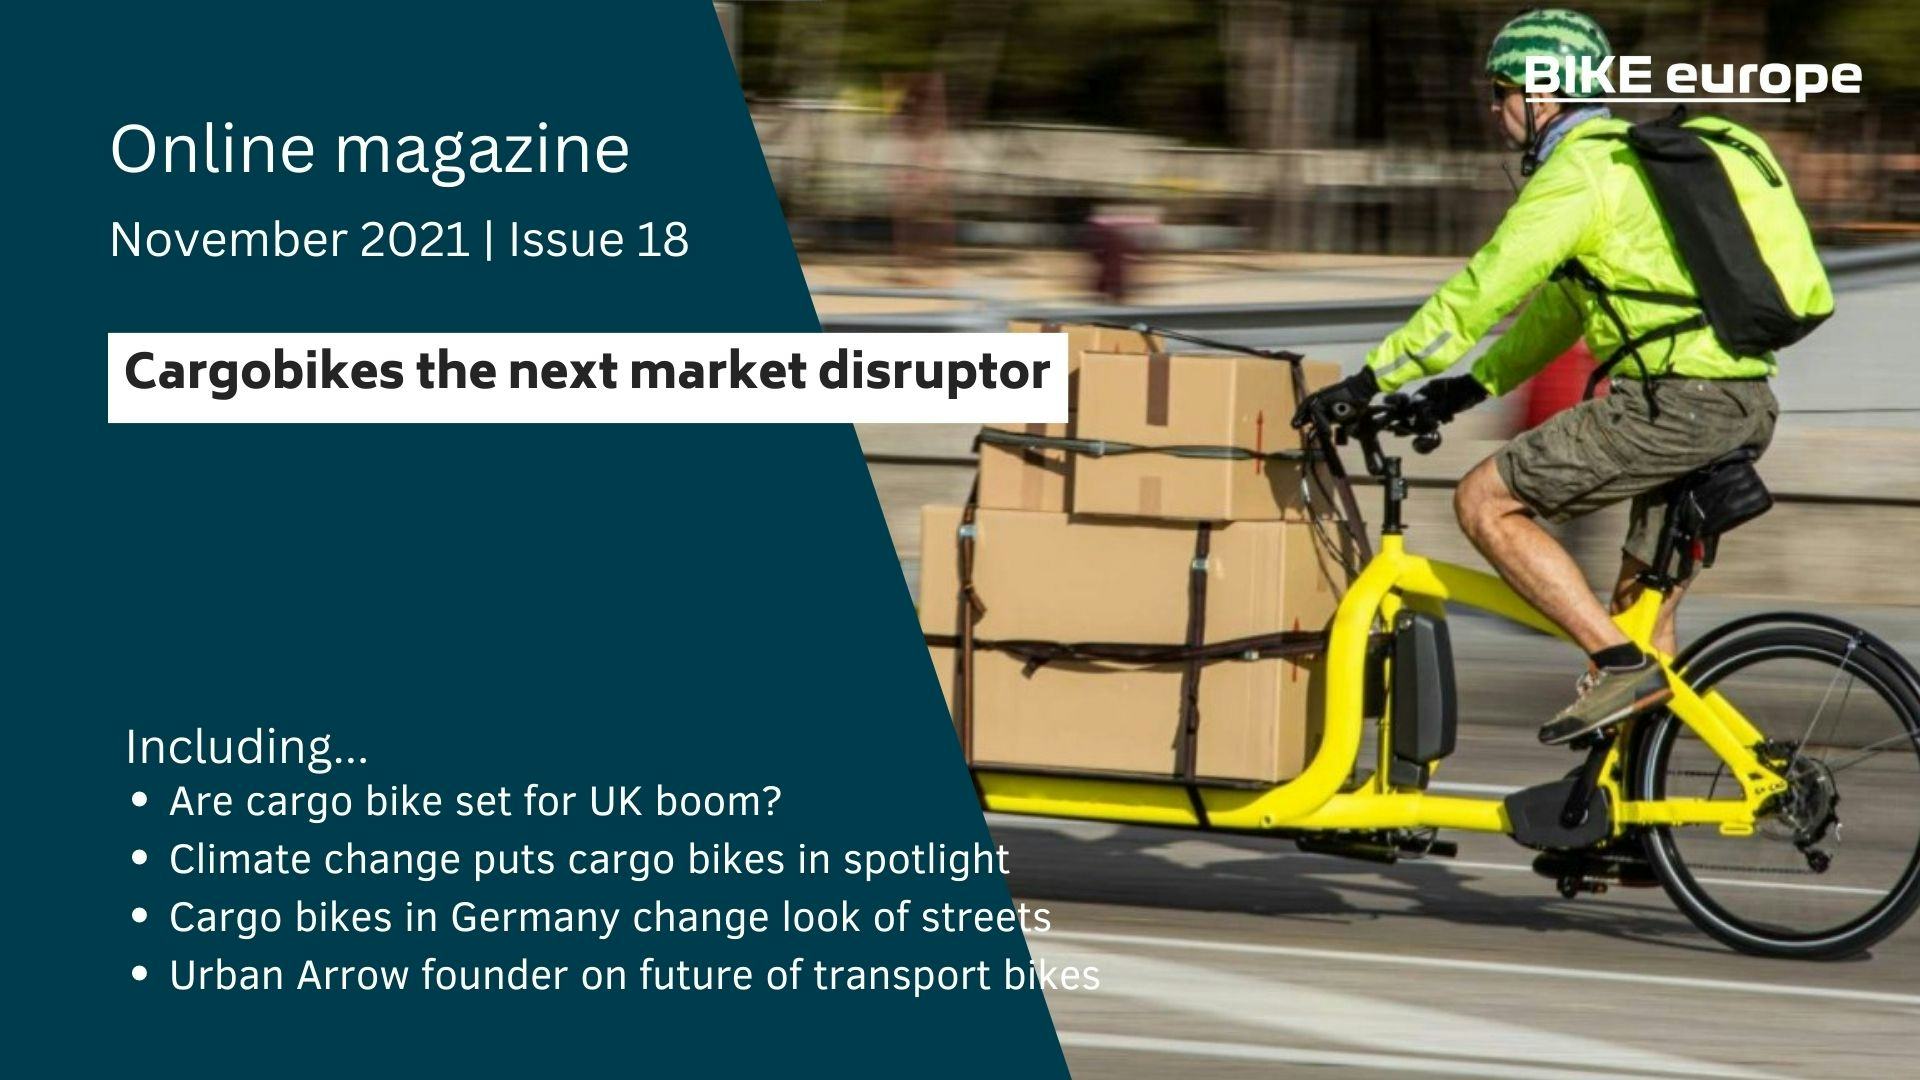 Online magazine: Cargobikes the next market disruptor